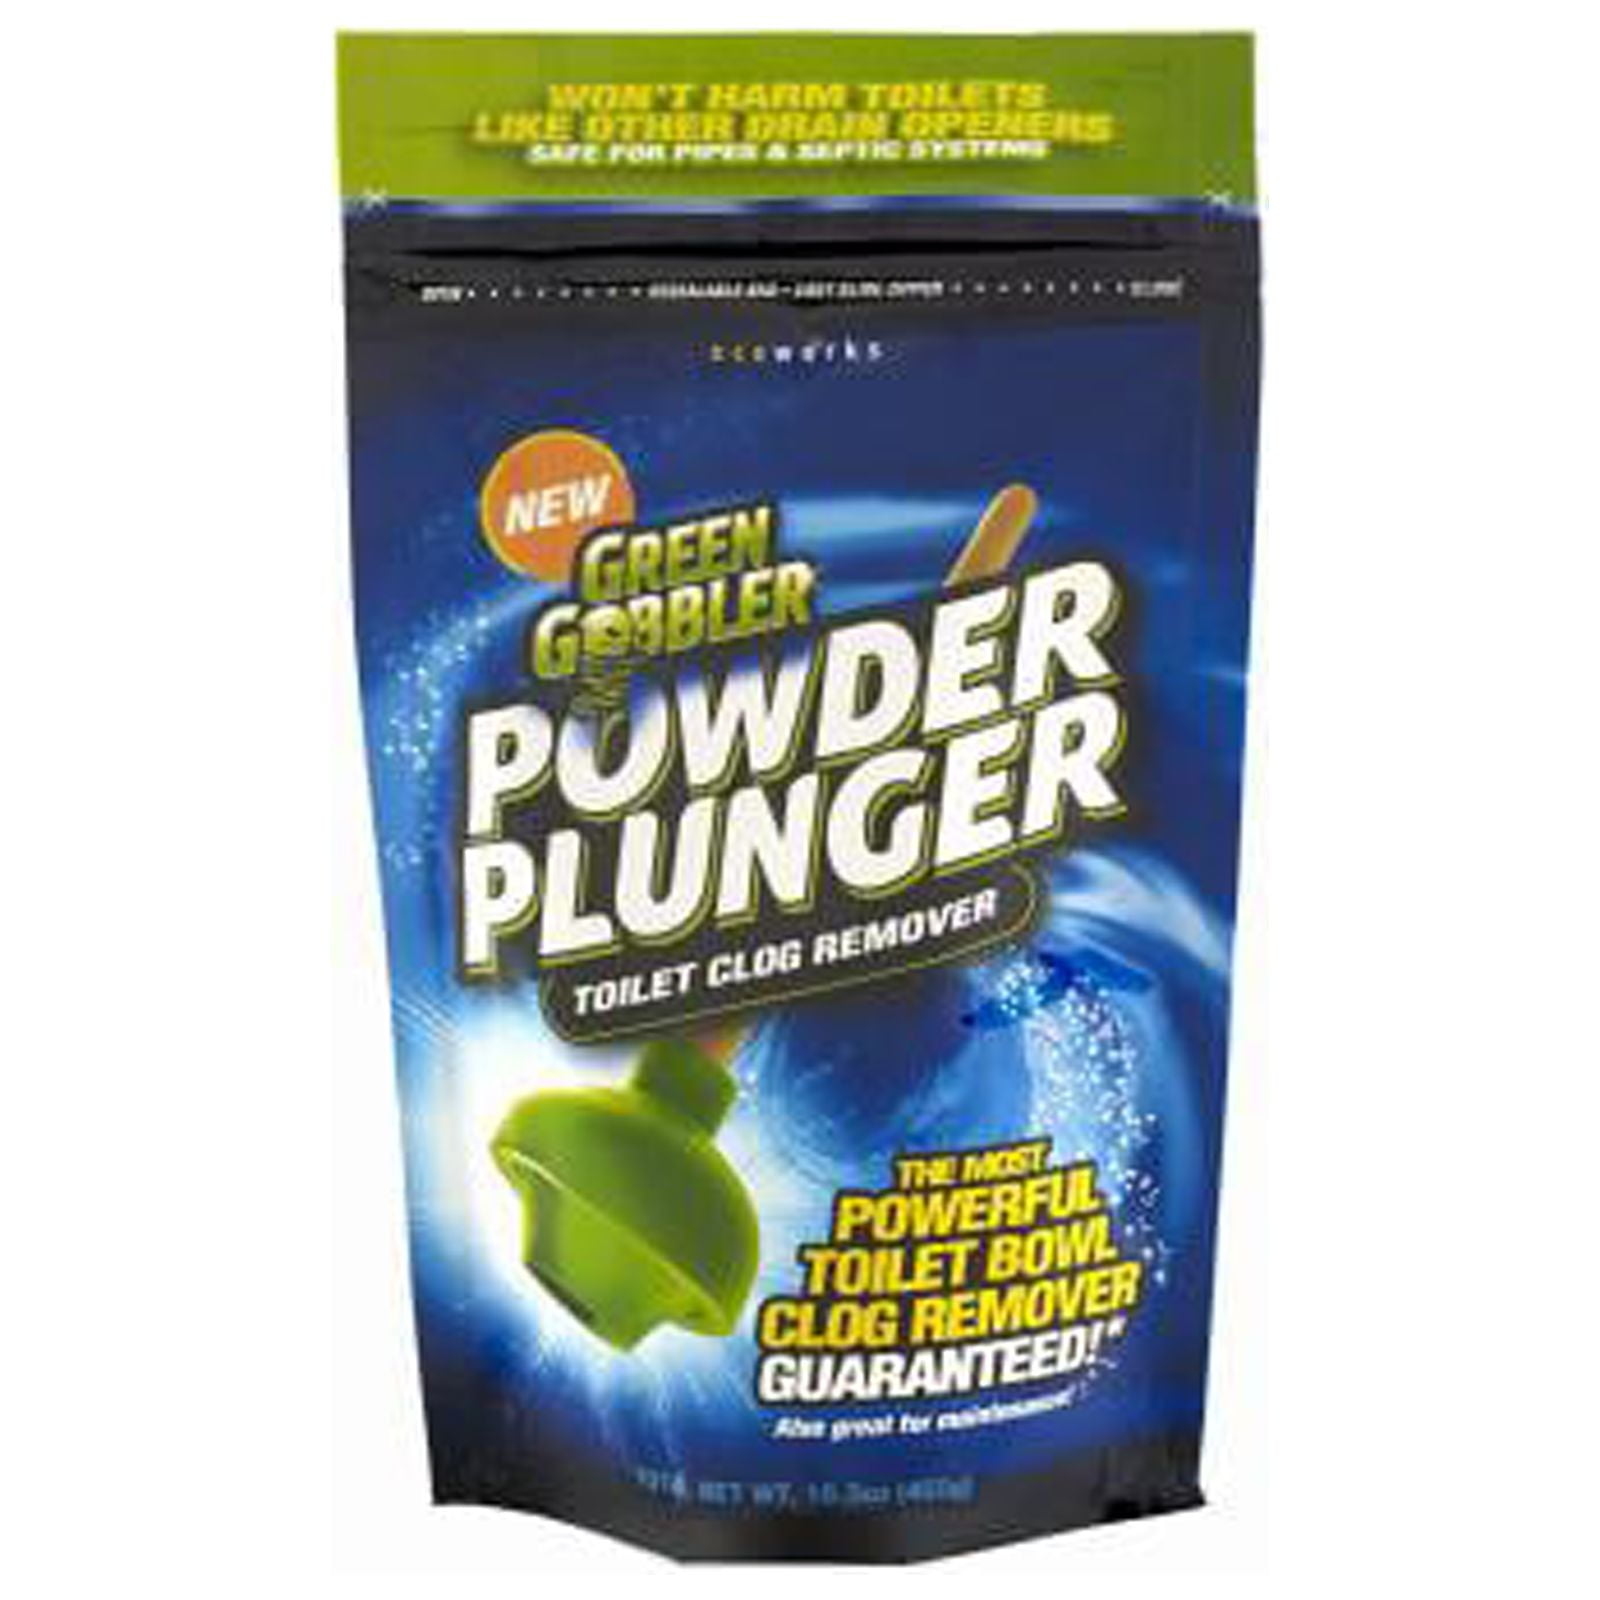 16.5 oz Powder Plunger Toilet Clog Remover by Green Gobbler at Fleet Farm